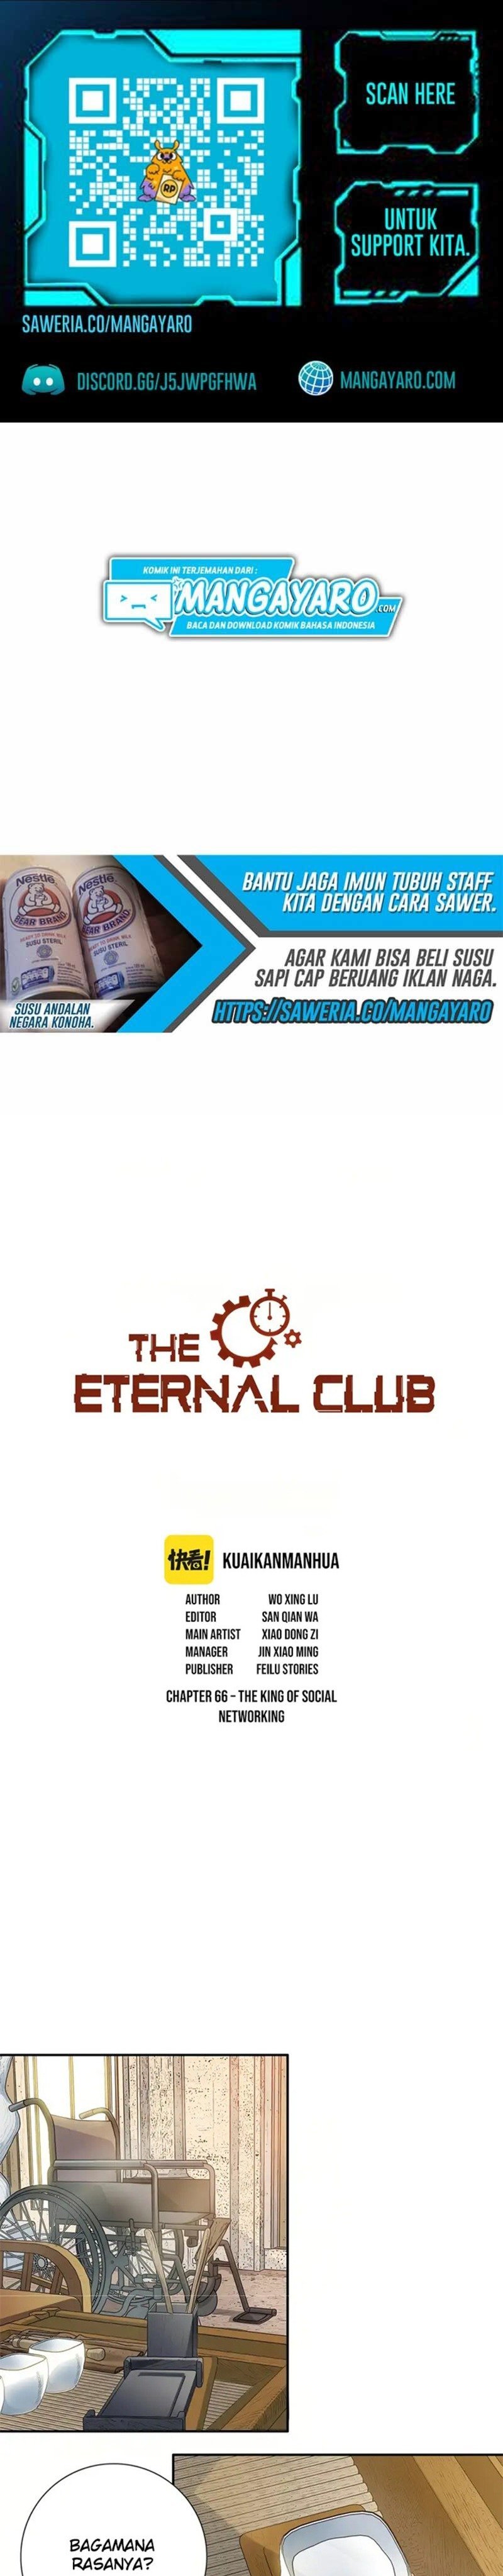 Eternal Club (I Built A Lifespan Club) Chapter 66 - 105